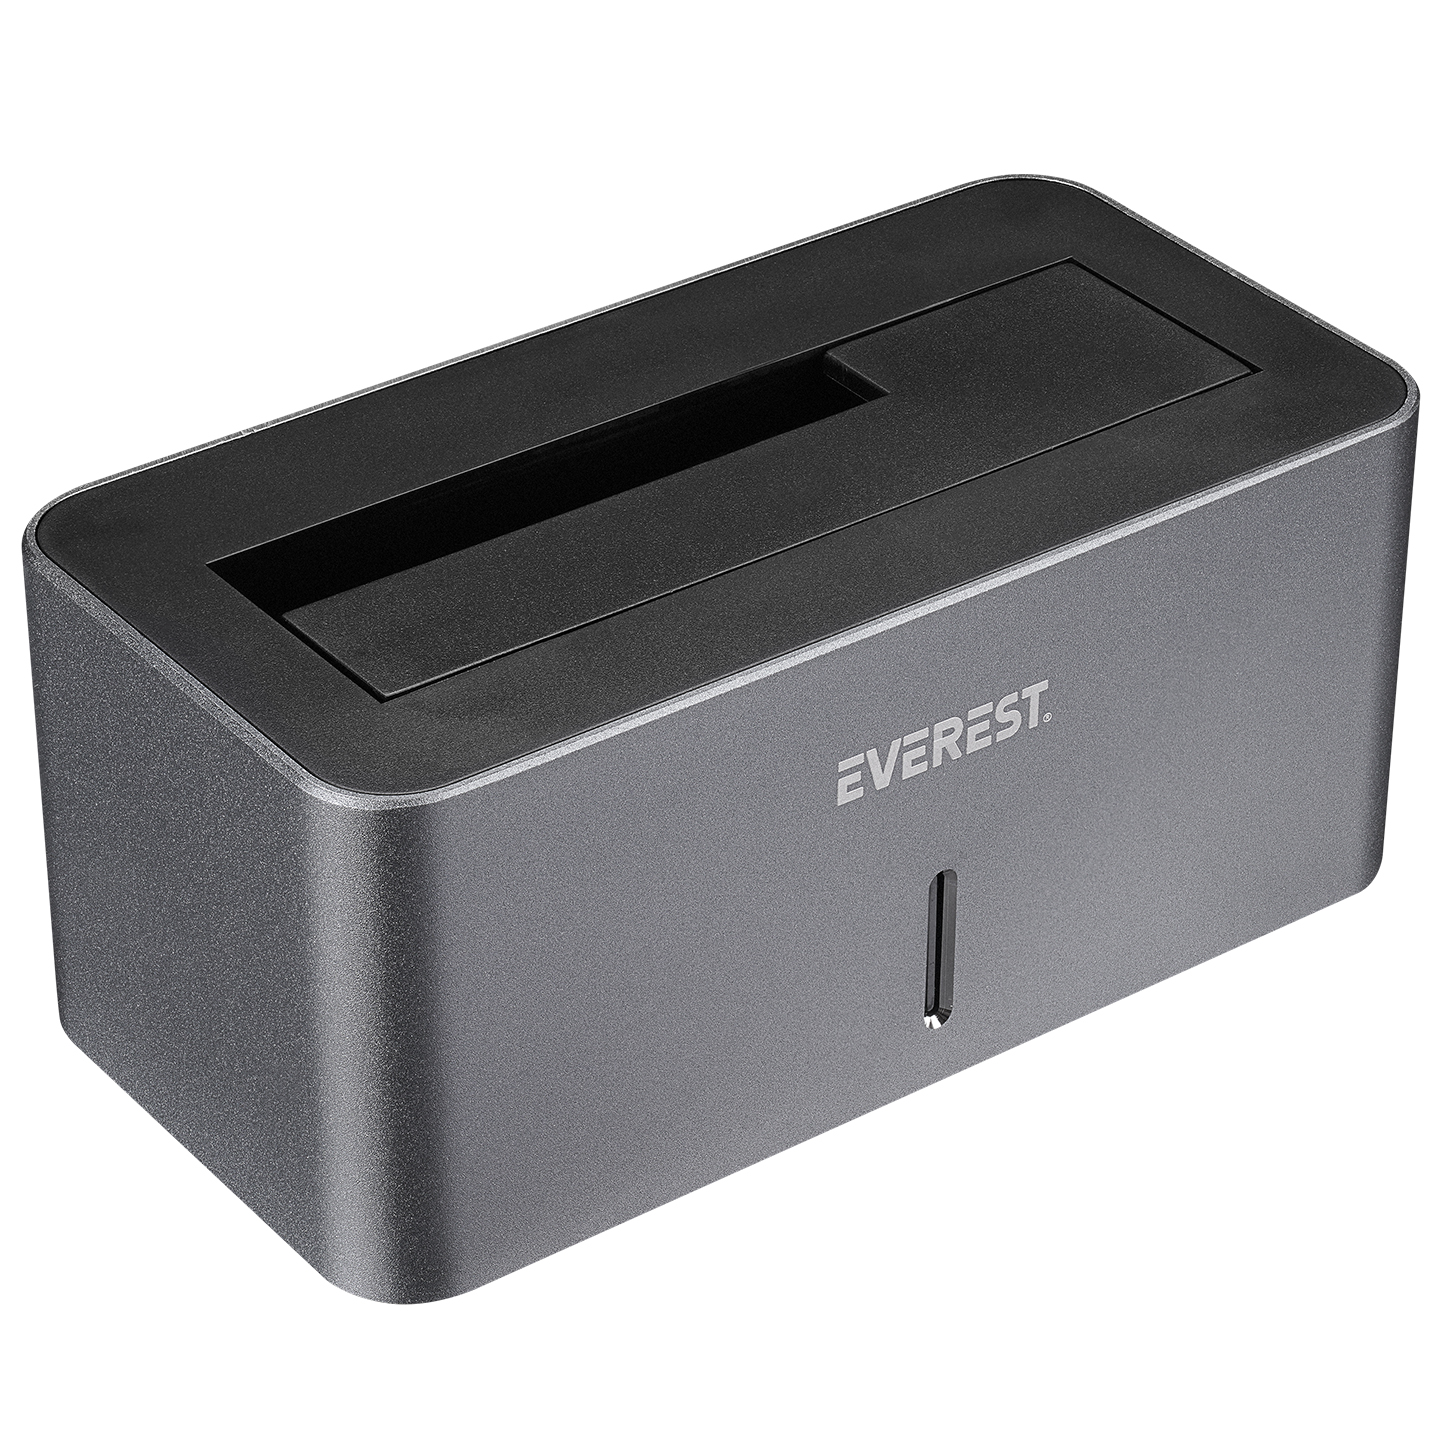 Everest HD3-530 2.5/3.5 USB3.0 6Gbps/UASP 4TB/6TB/8TB Docking Harddisk Kutusu